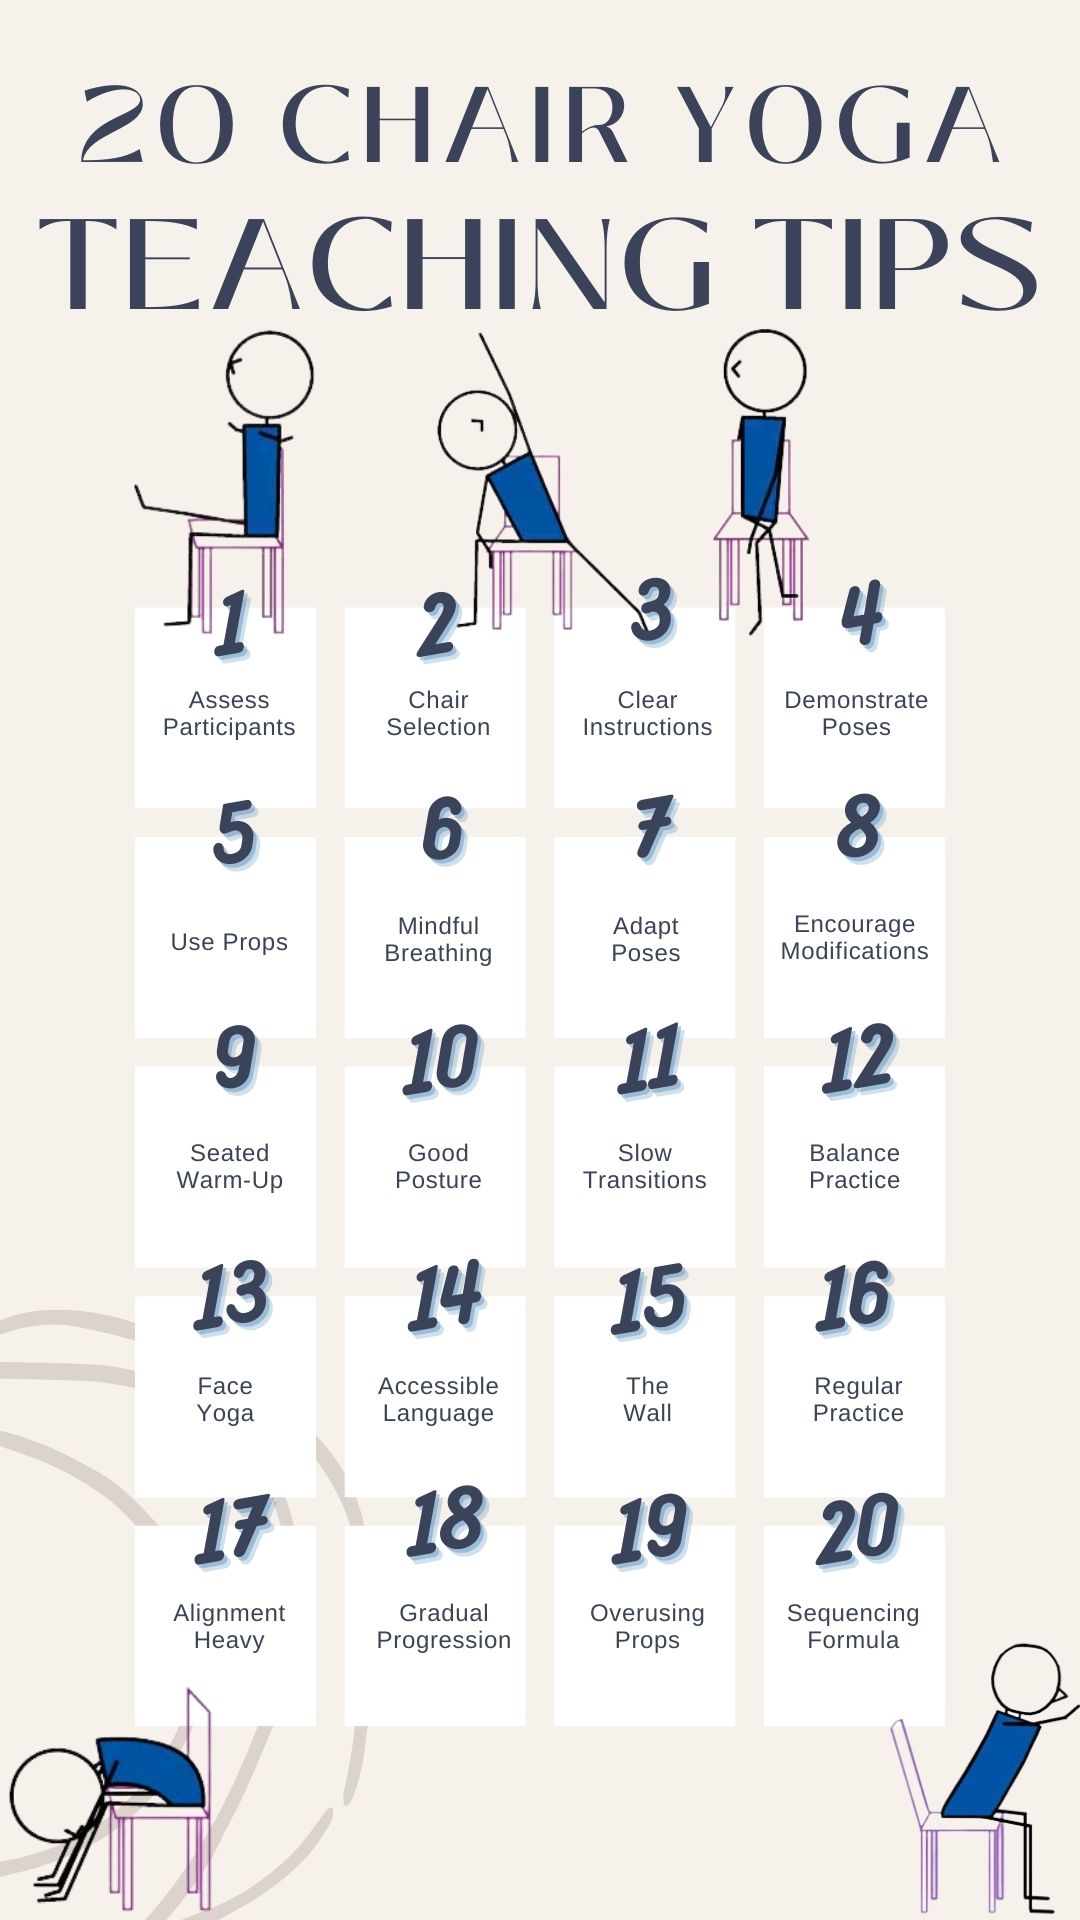 20 Chair Yoga Teaching Tips Infographic